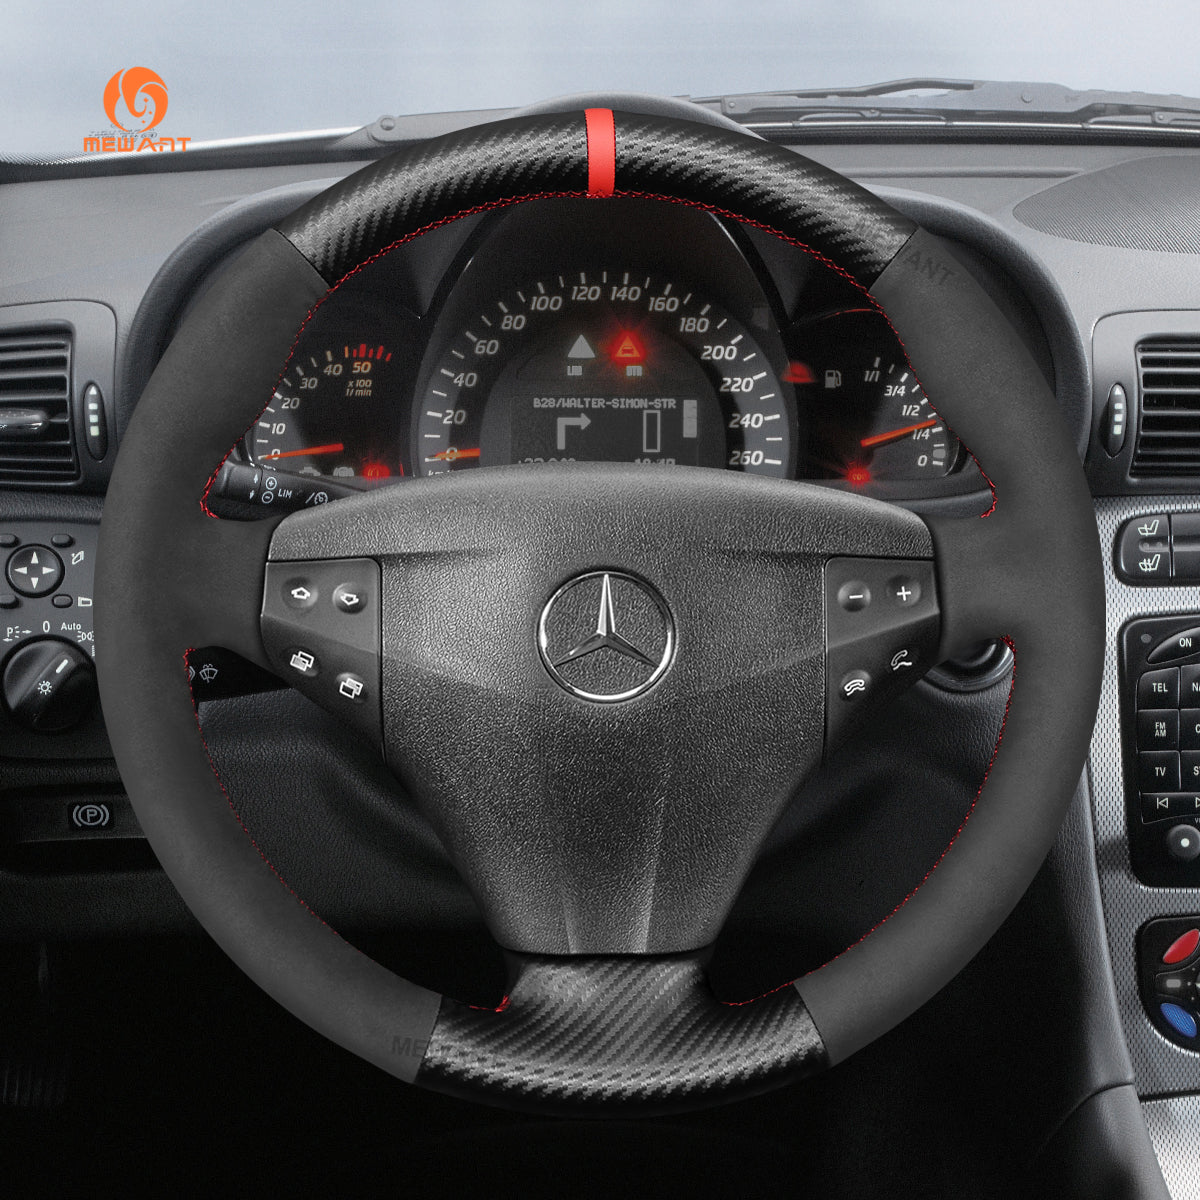 MEWANT Carbon Fiber Suede Car Steering Wheel Cover for Mercedes-Benz C-Class W203 Kompressor 2001-2004